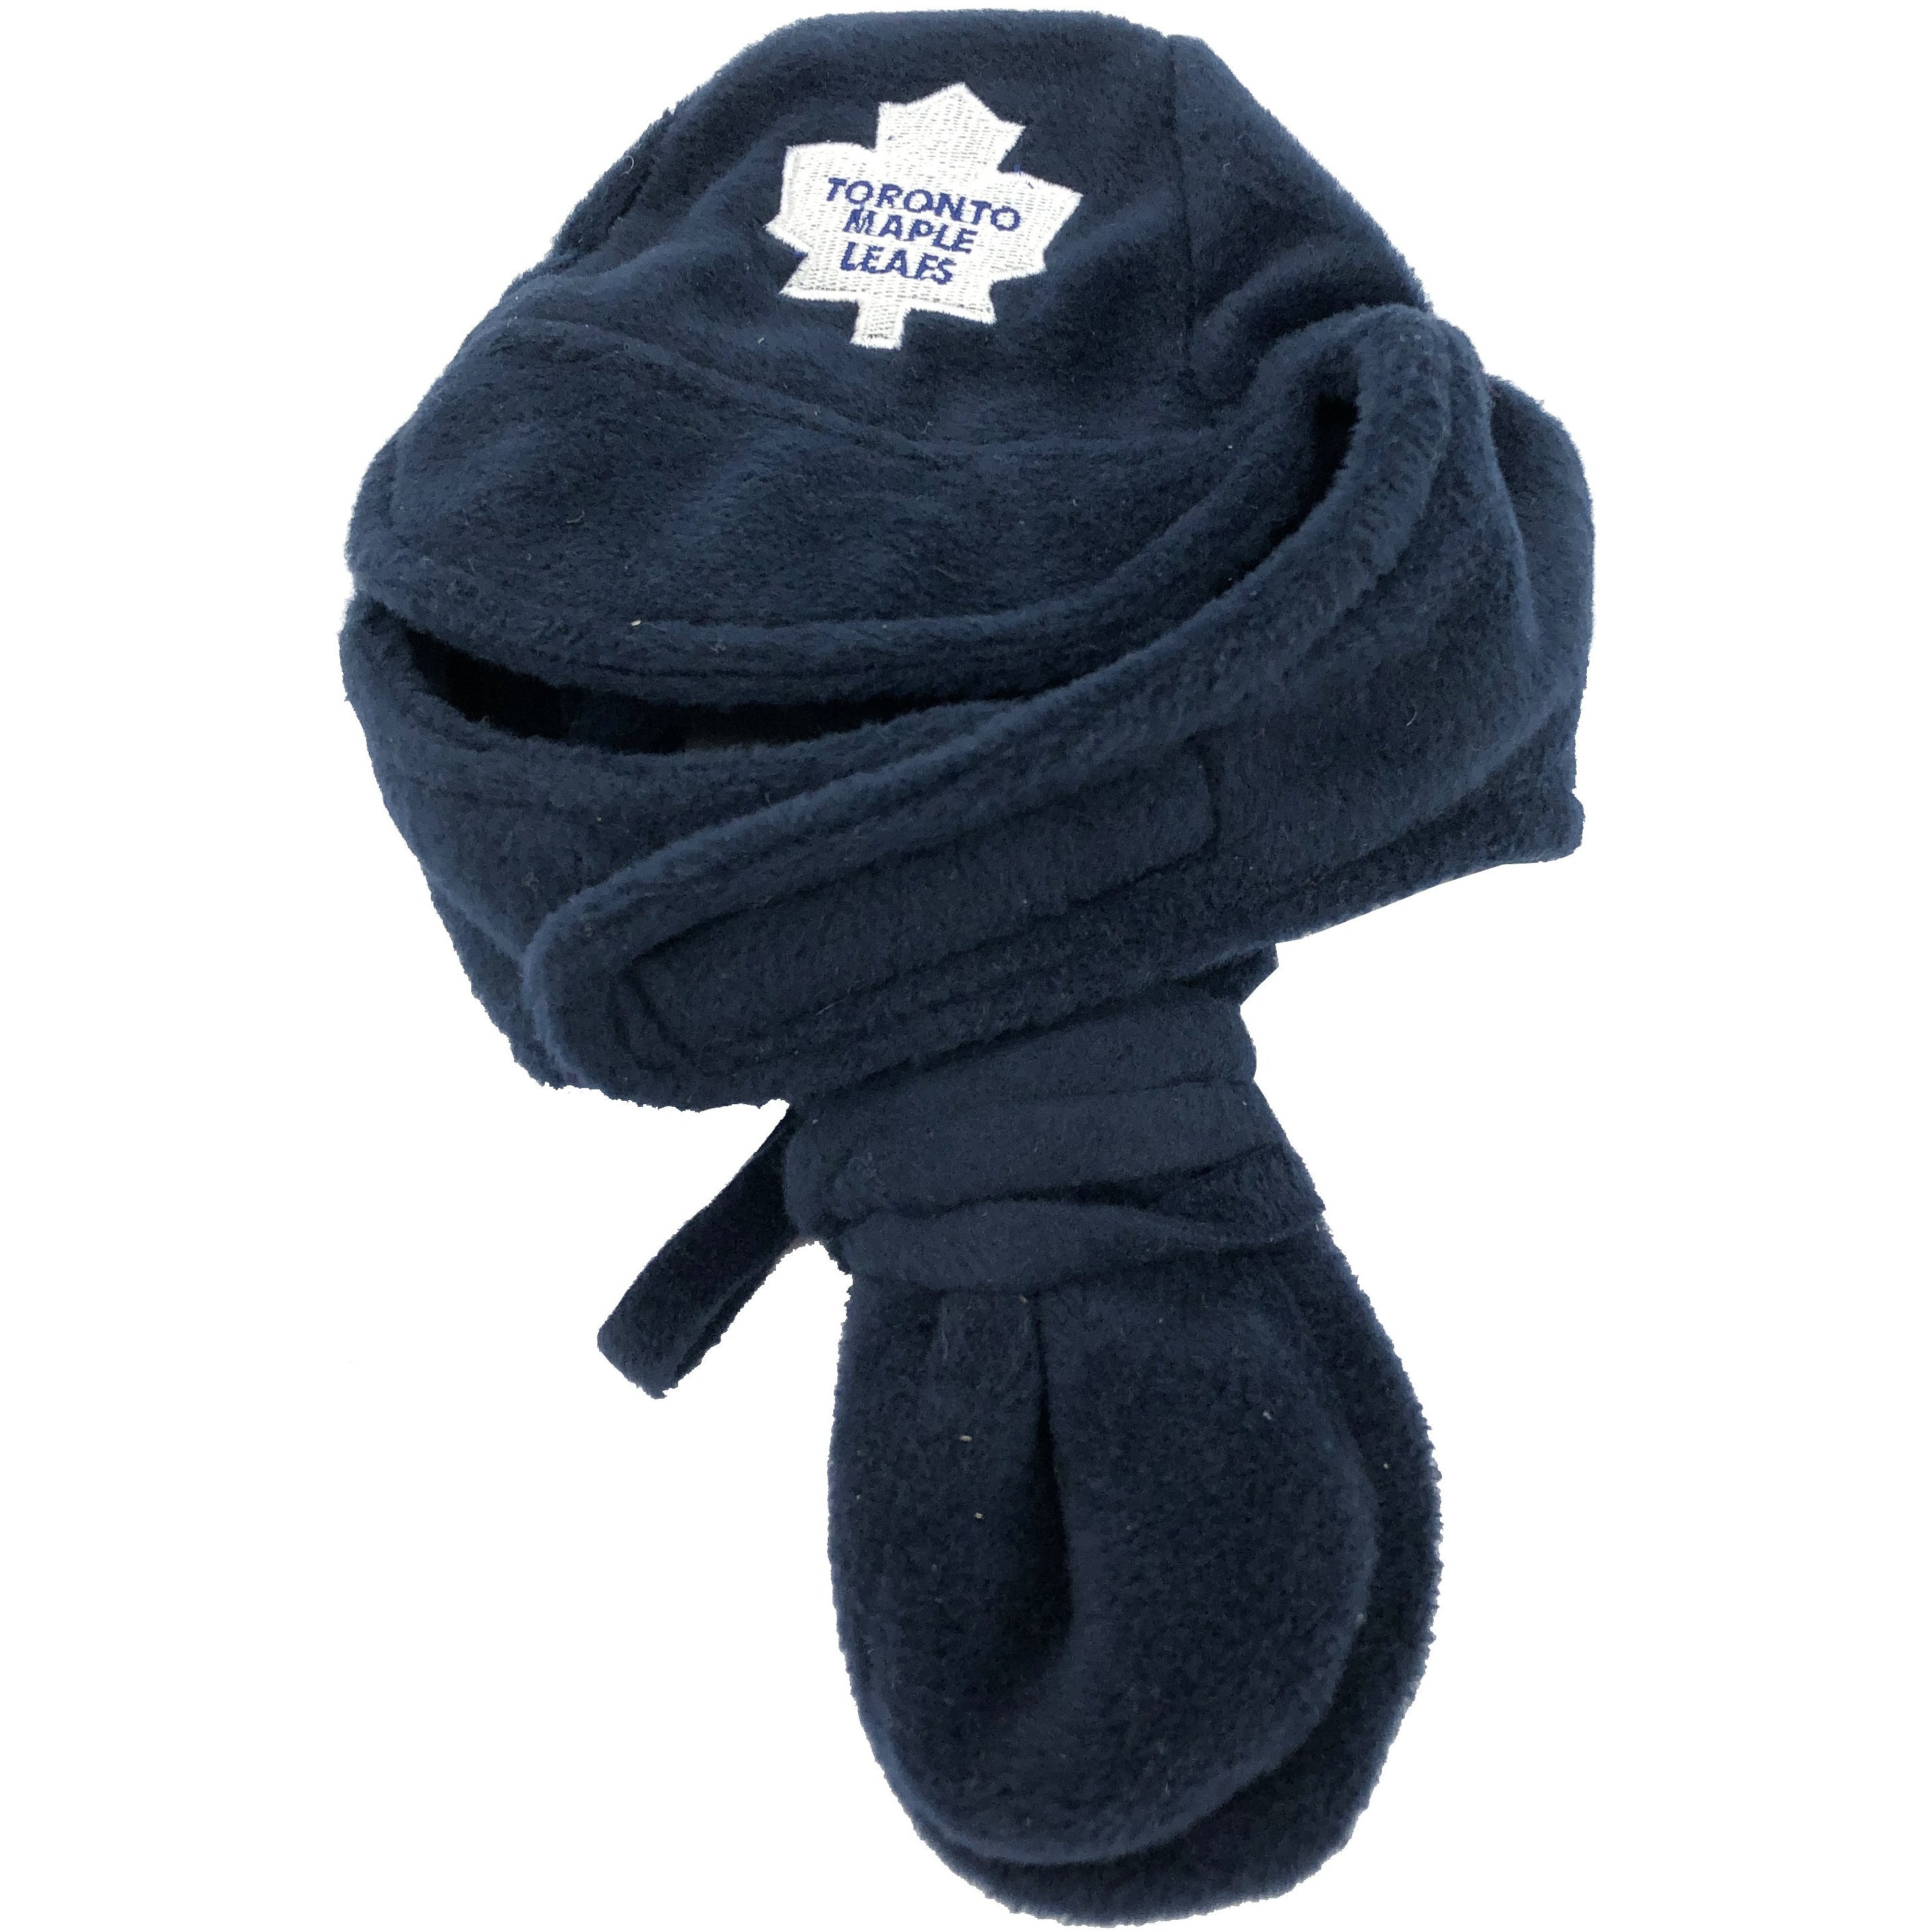 NHL Infant/ Toddler Winter Hat and Mitt Set / NHL Hockey Logo / Adjustable Chin Strap / Outerwear